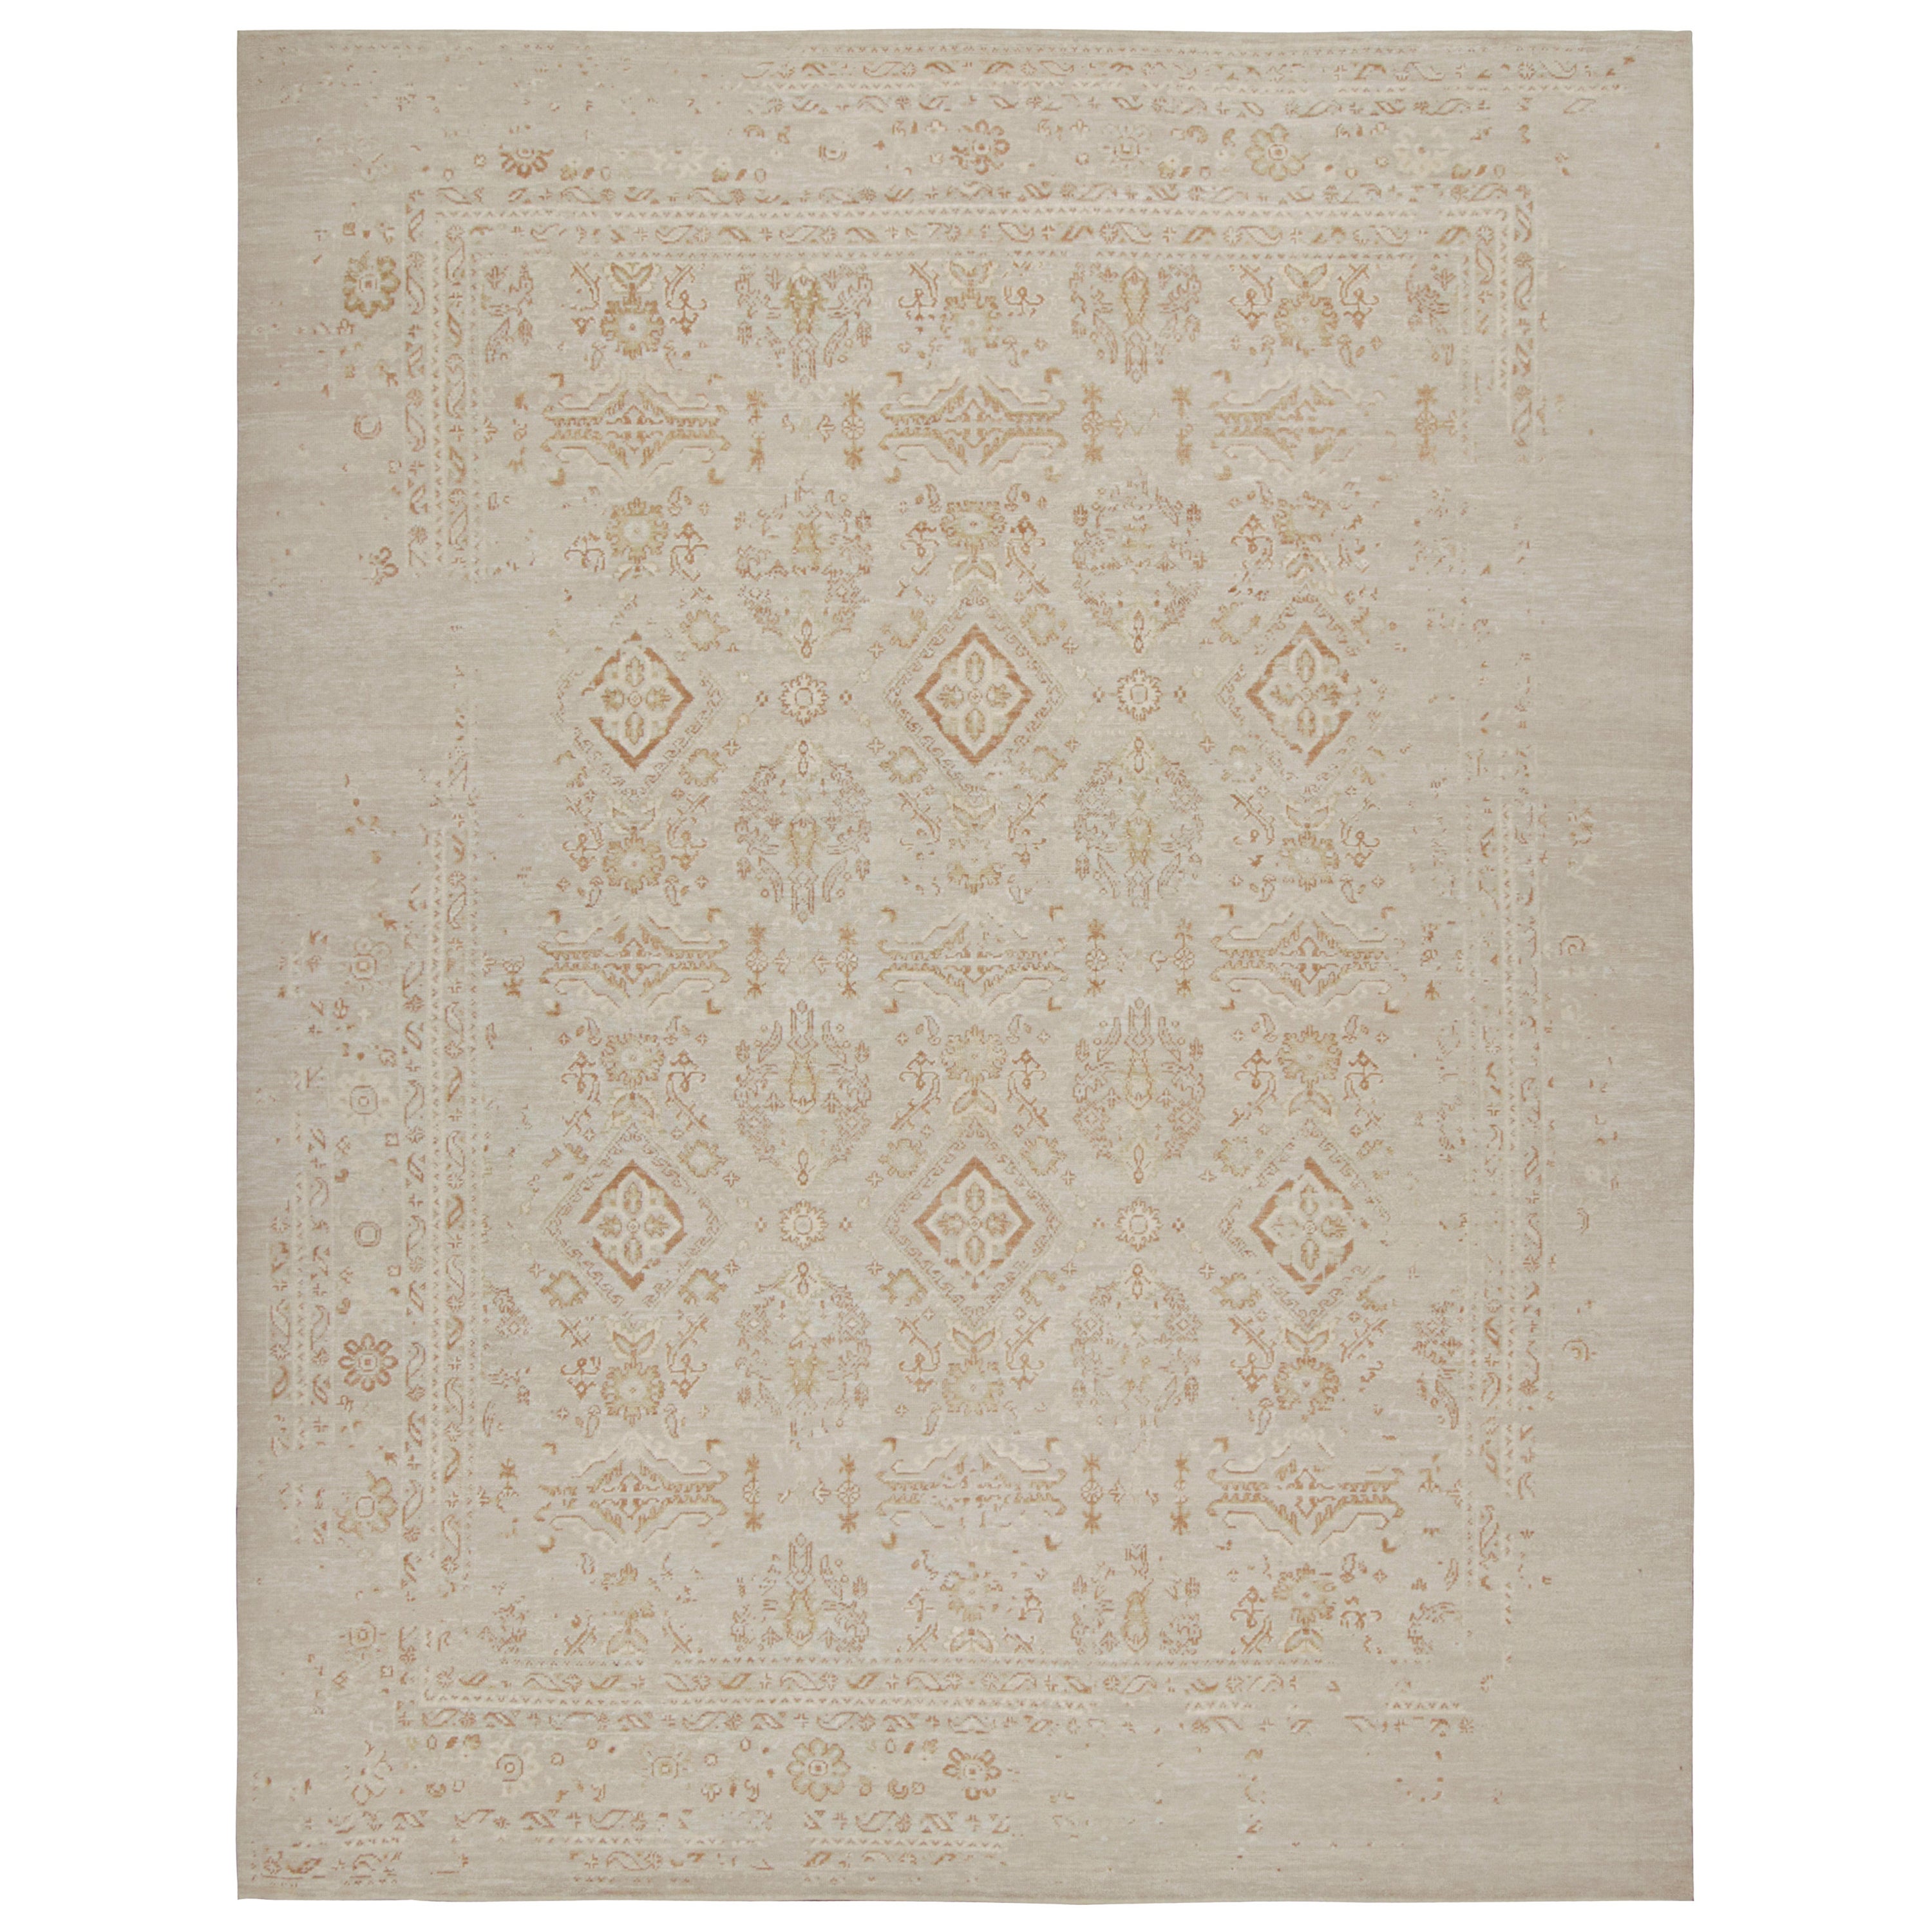 Rug & Kilim’s Oushak style rug in Greige & Brown Floral Patterns